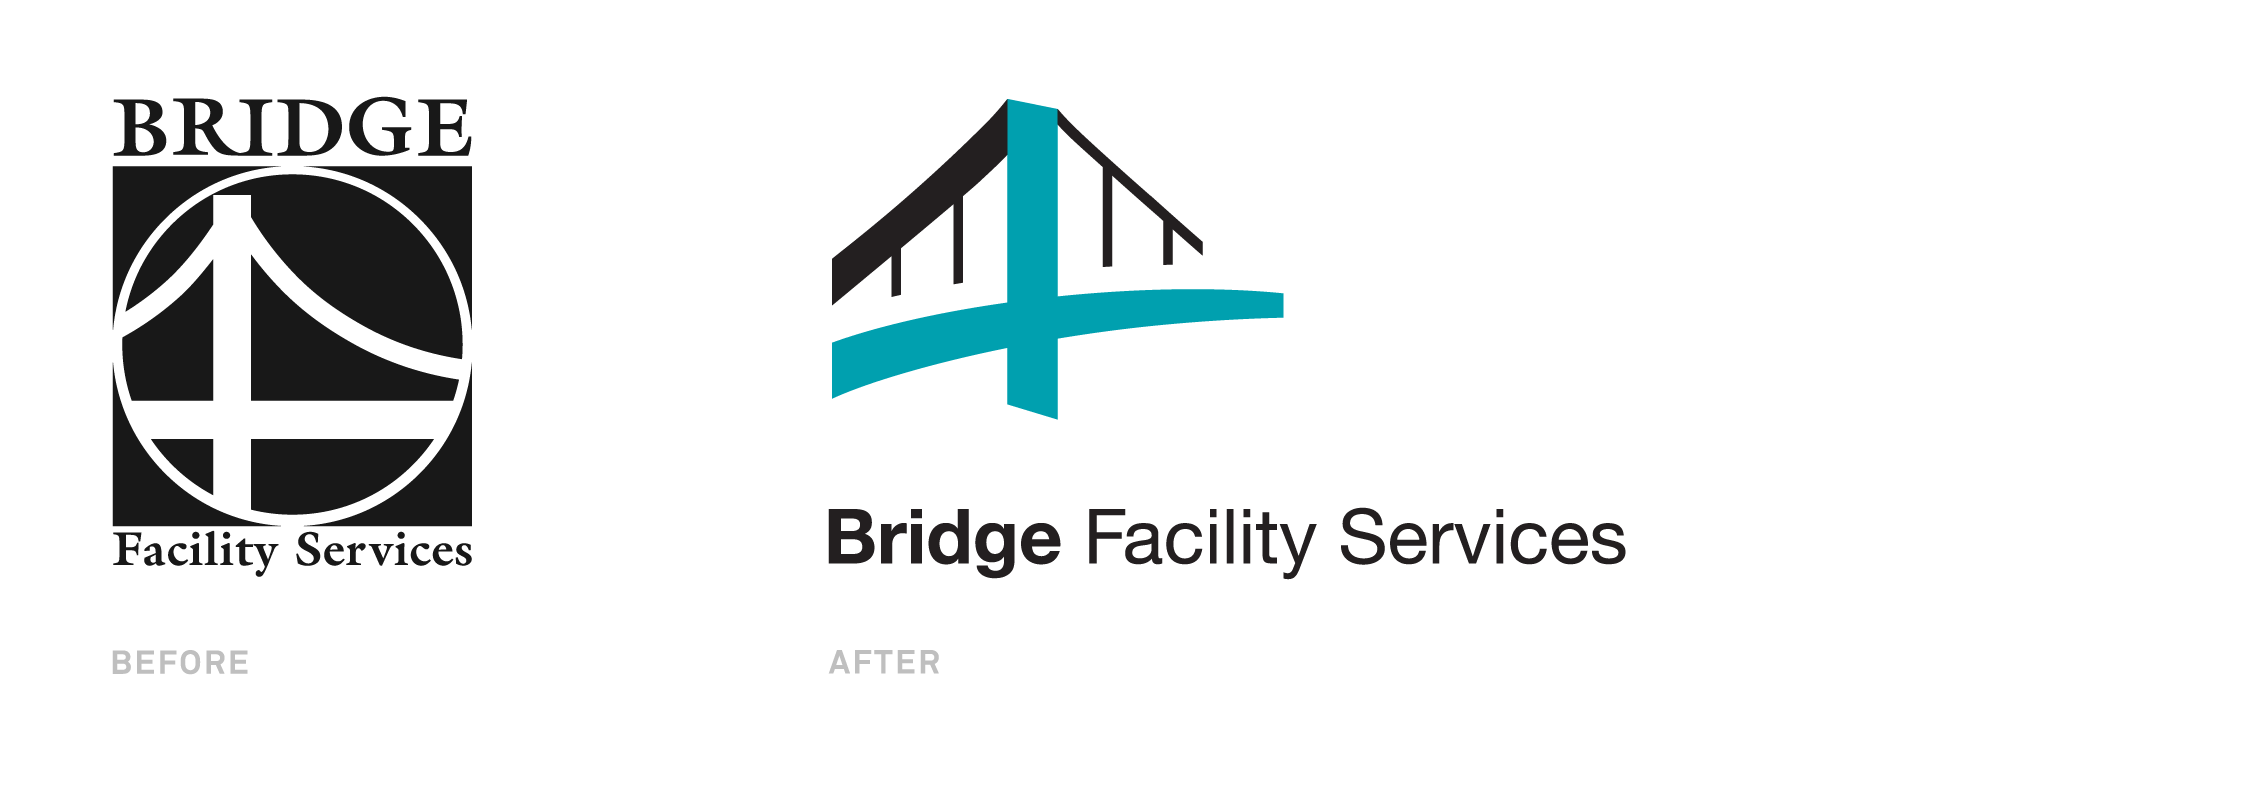 Rebrand for Bridge Facility Services featuring old logo vs rebrand logo